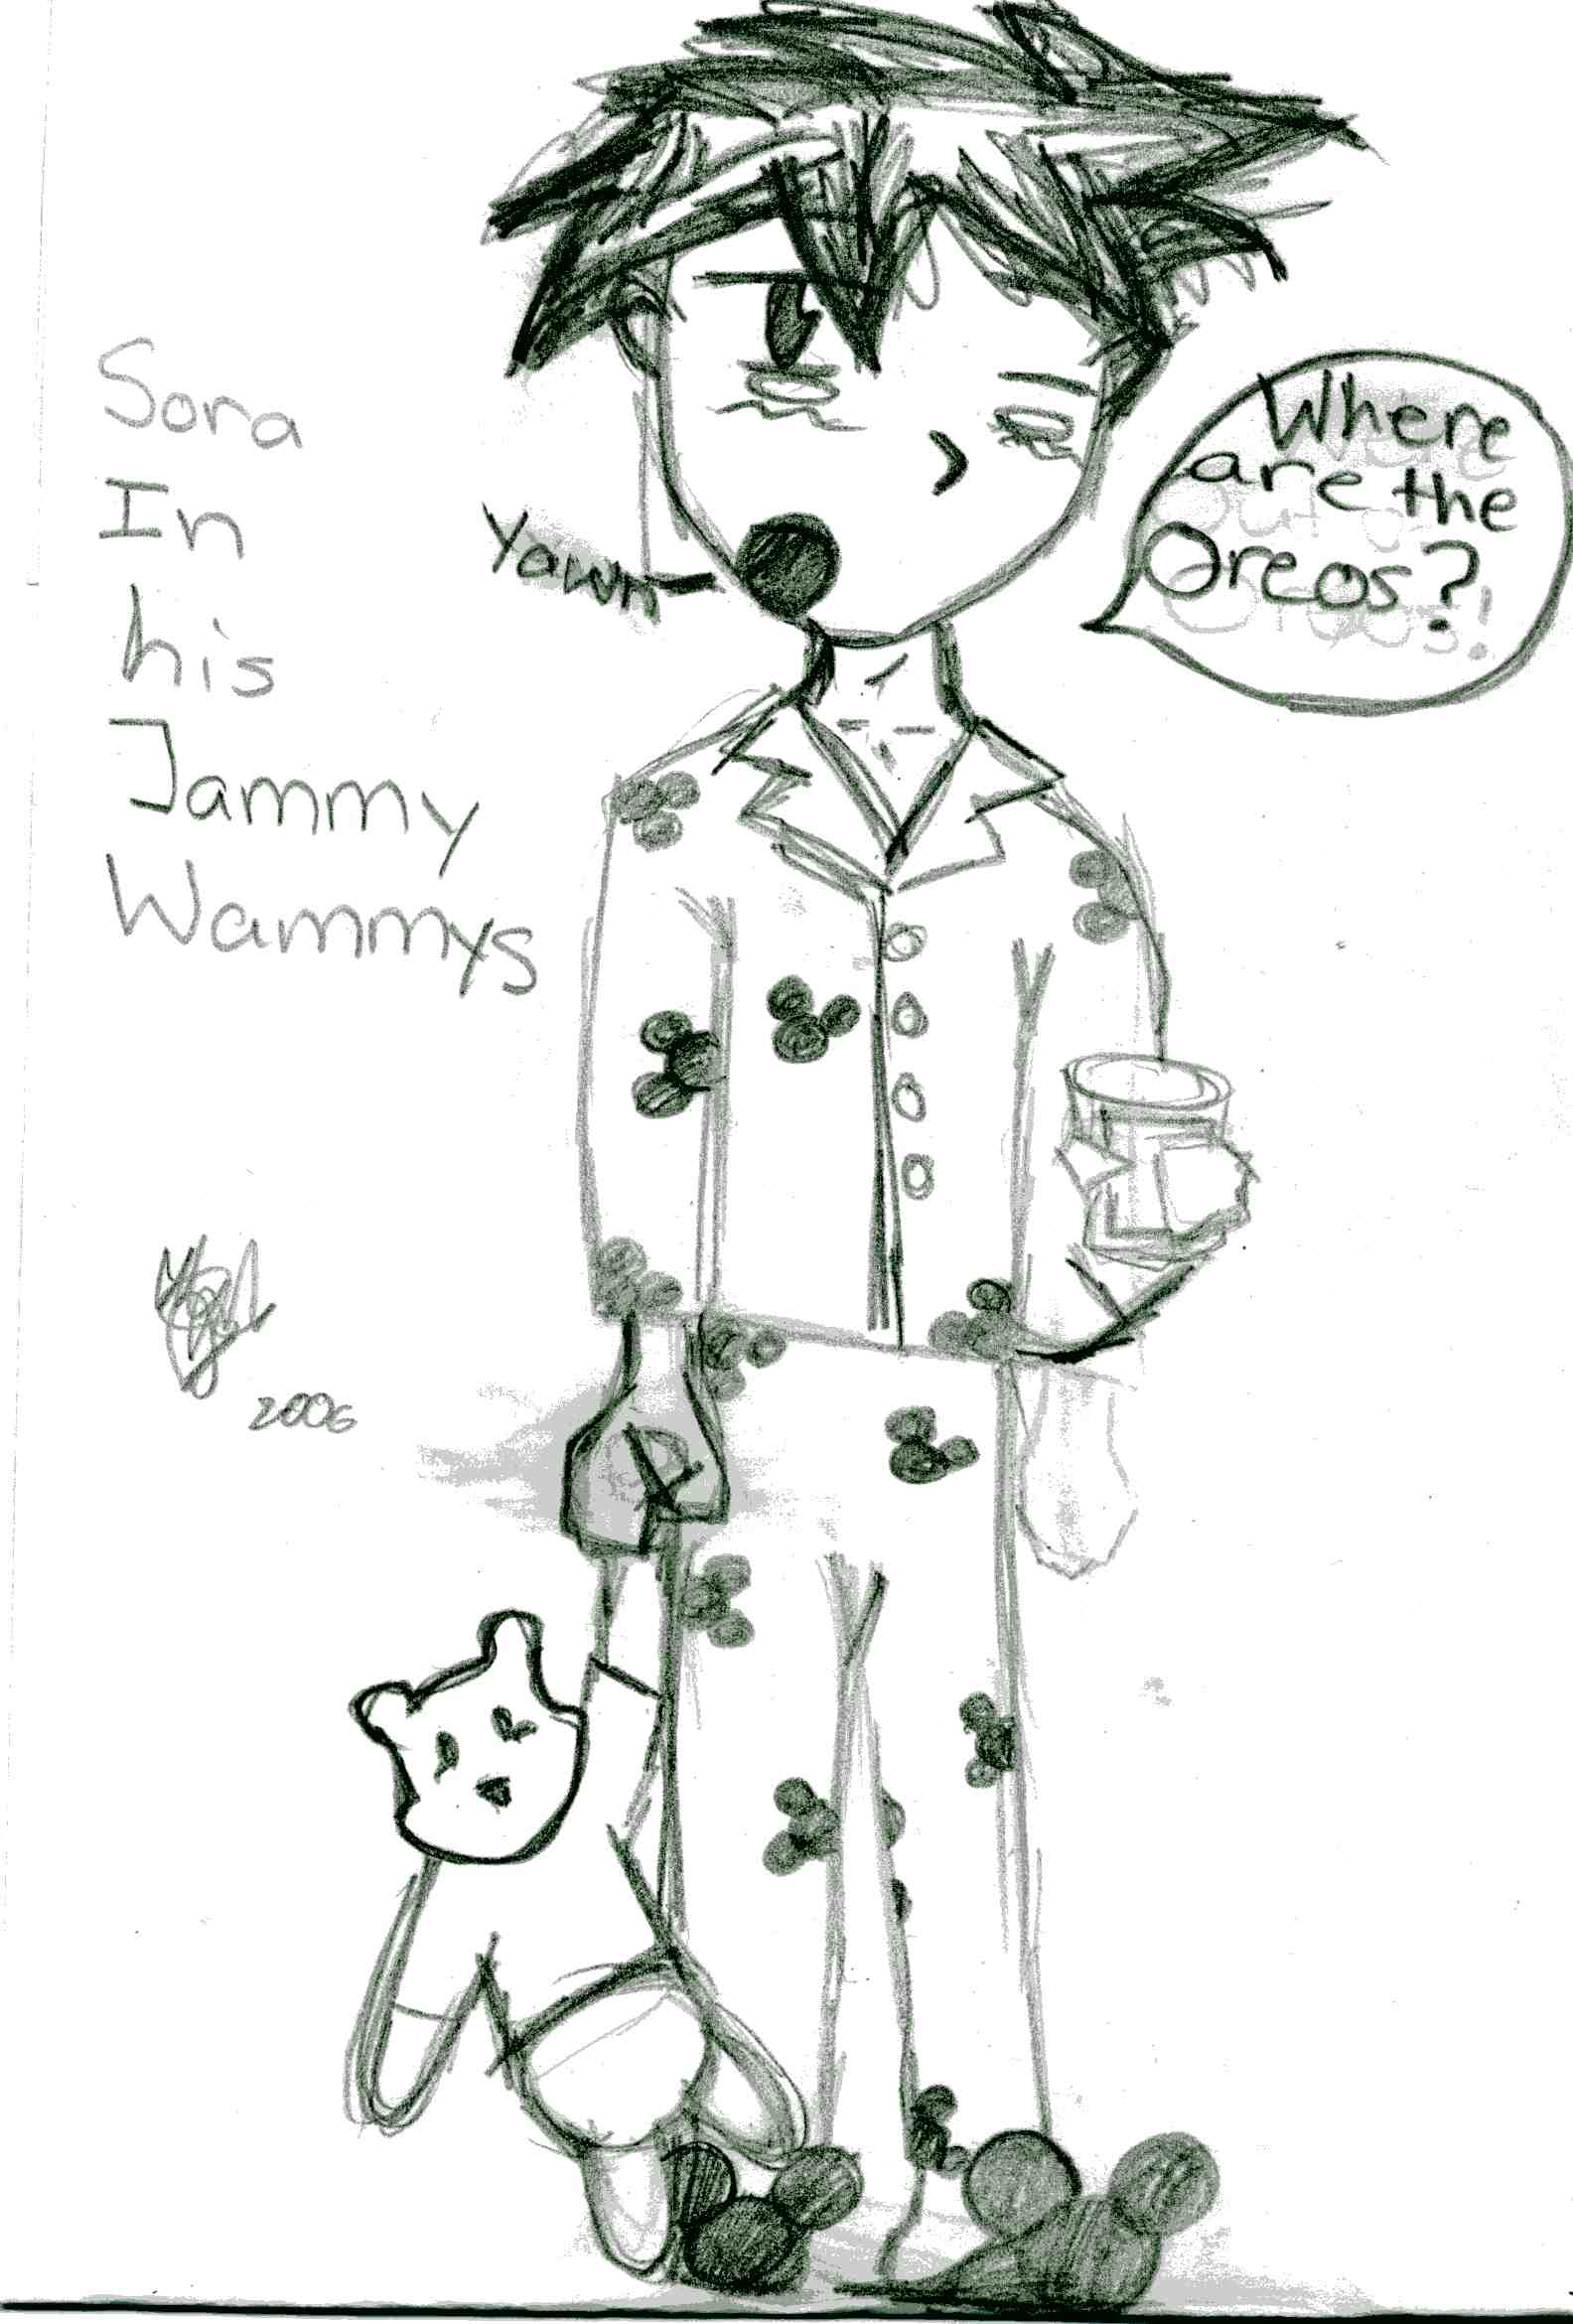 Sora in his jammy wammys by Ilyh